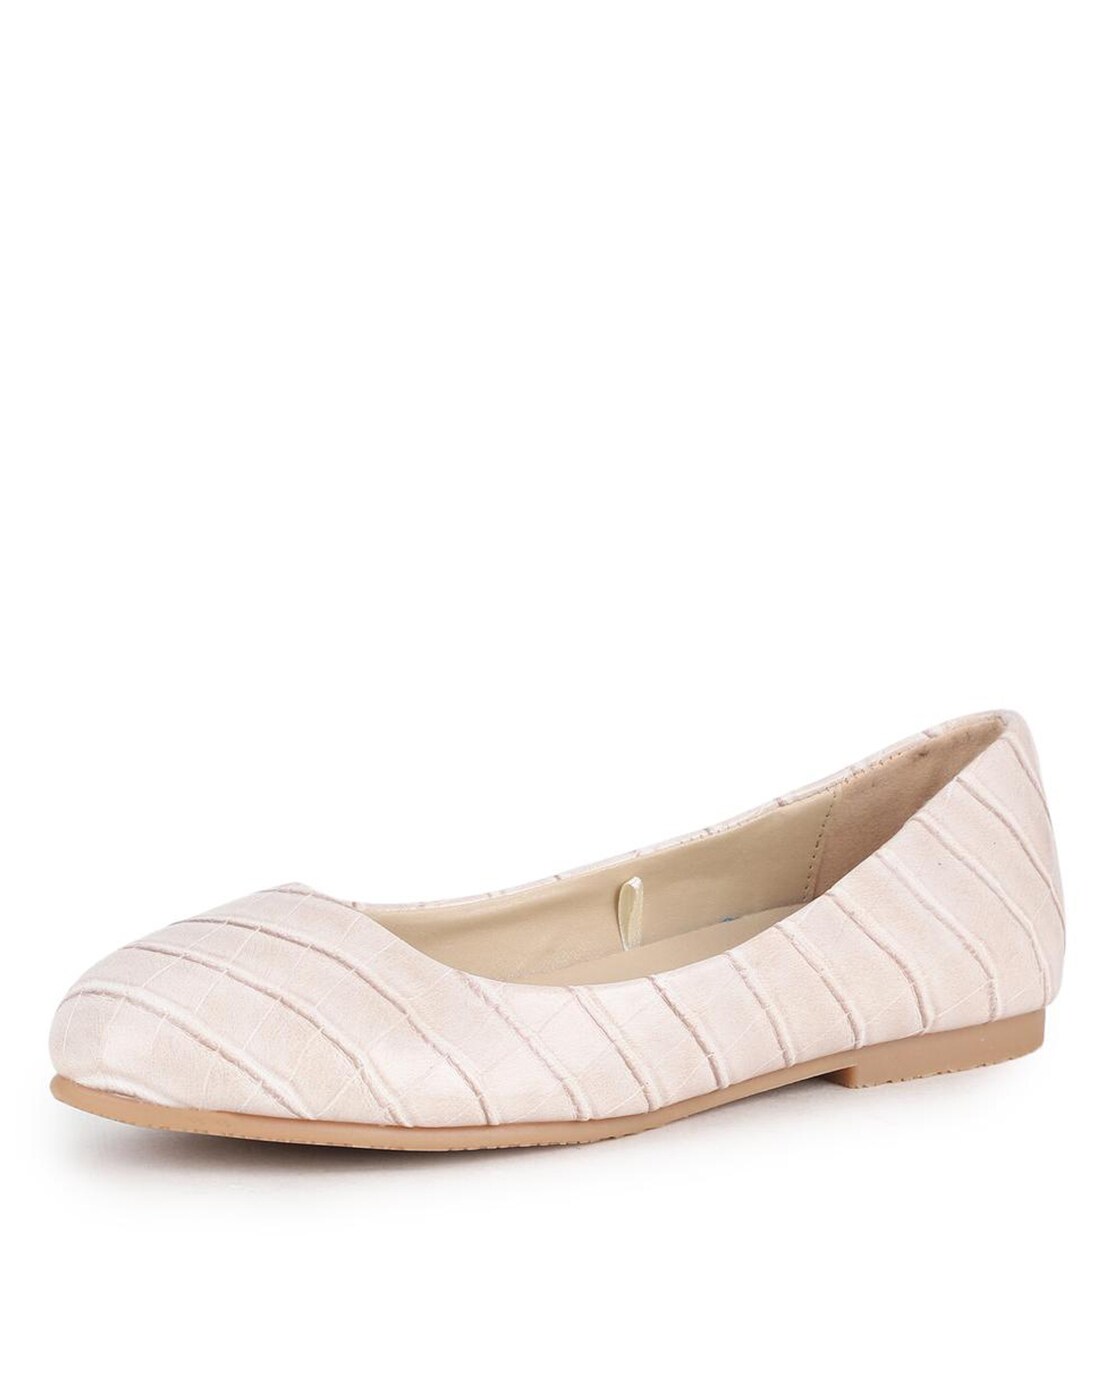 ballerina flat shoes